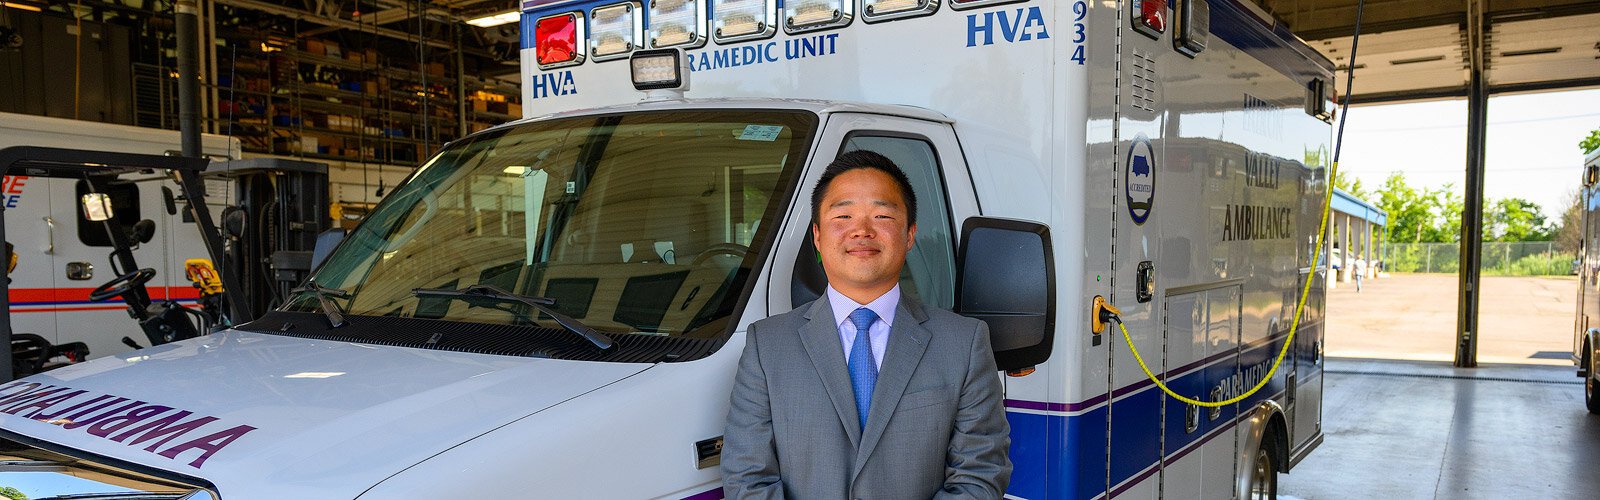 Huron Valley Ambulance Vice President Karl Rock.